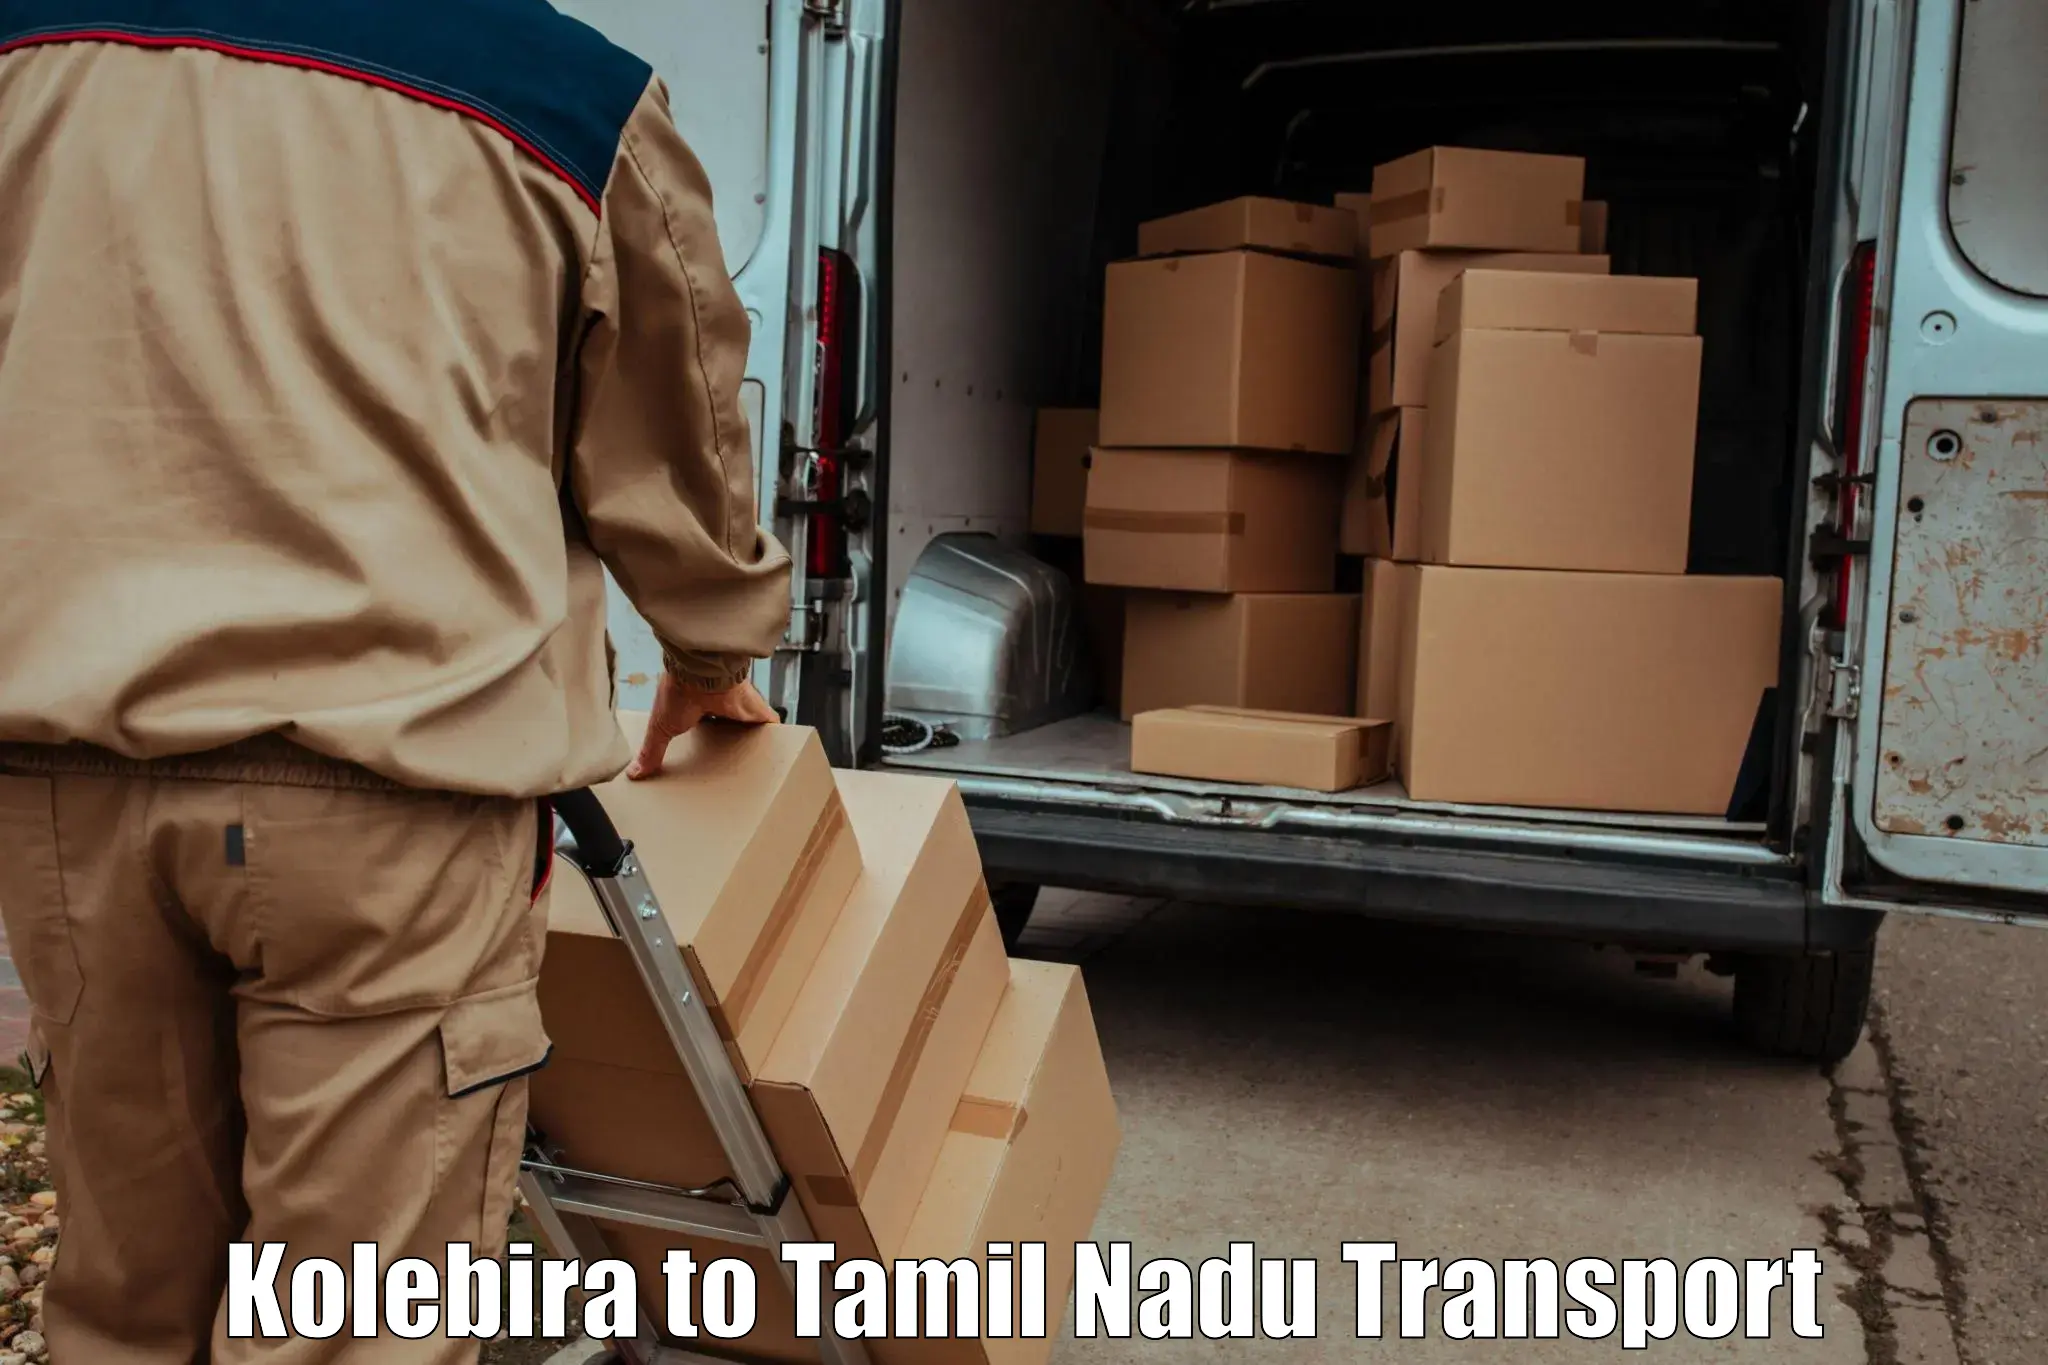 Delivery service Kolebira to Thanjavur